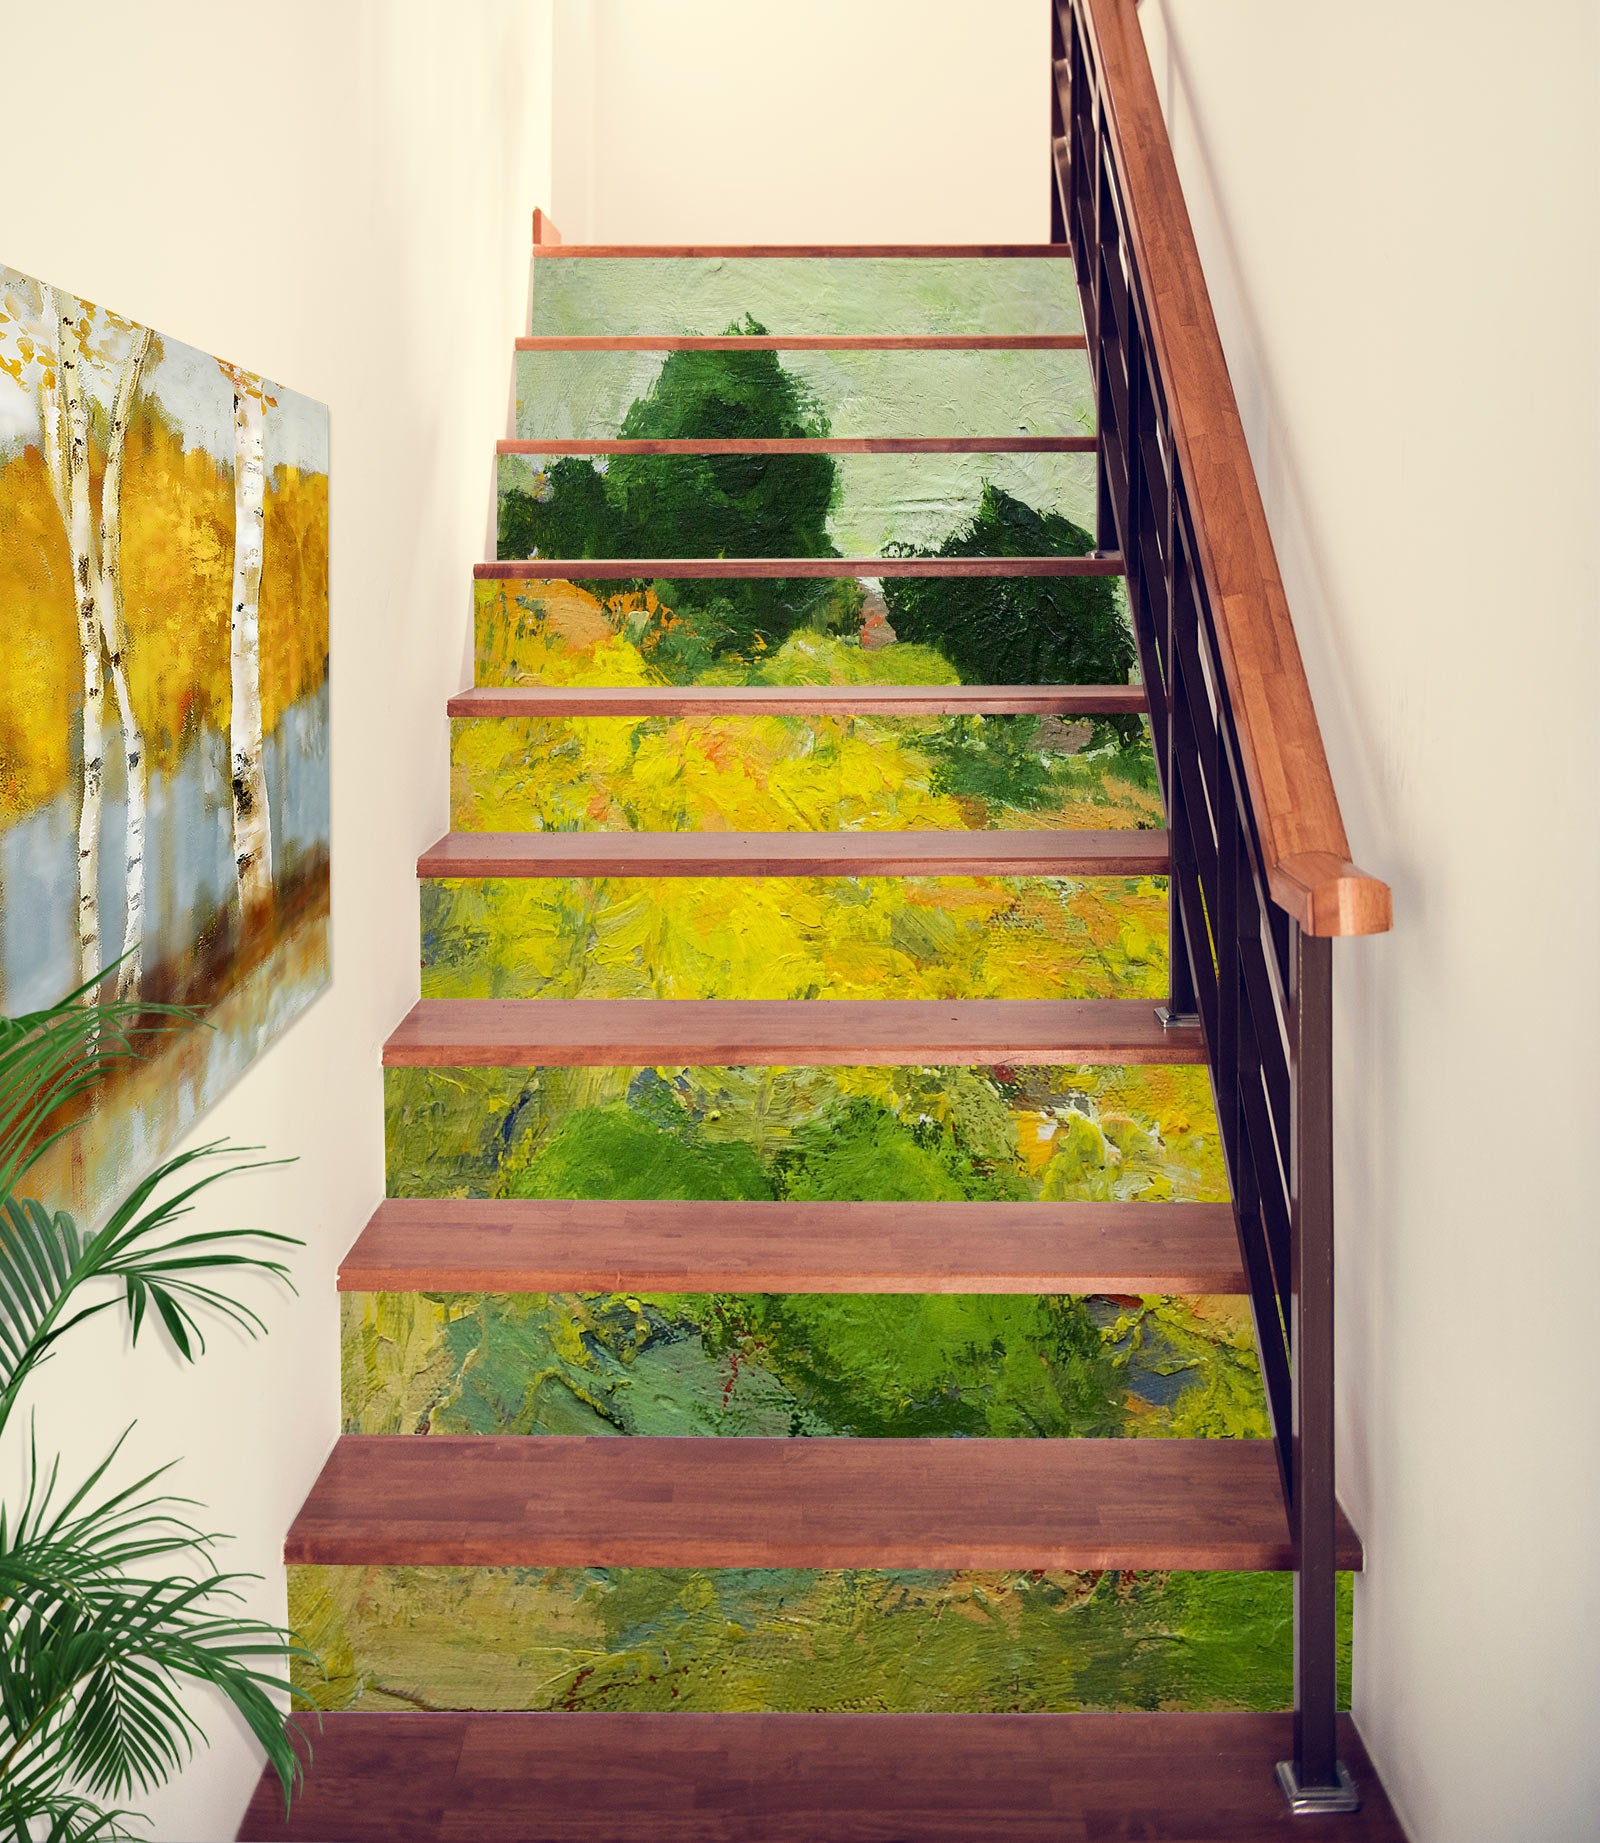 3D Yellow-Green Clump Oil Painting 9070 Allan P. Friedlander Stair Risers